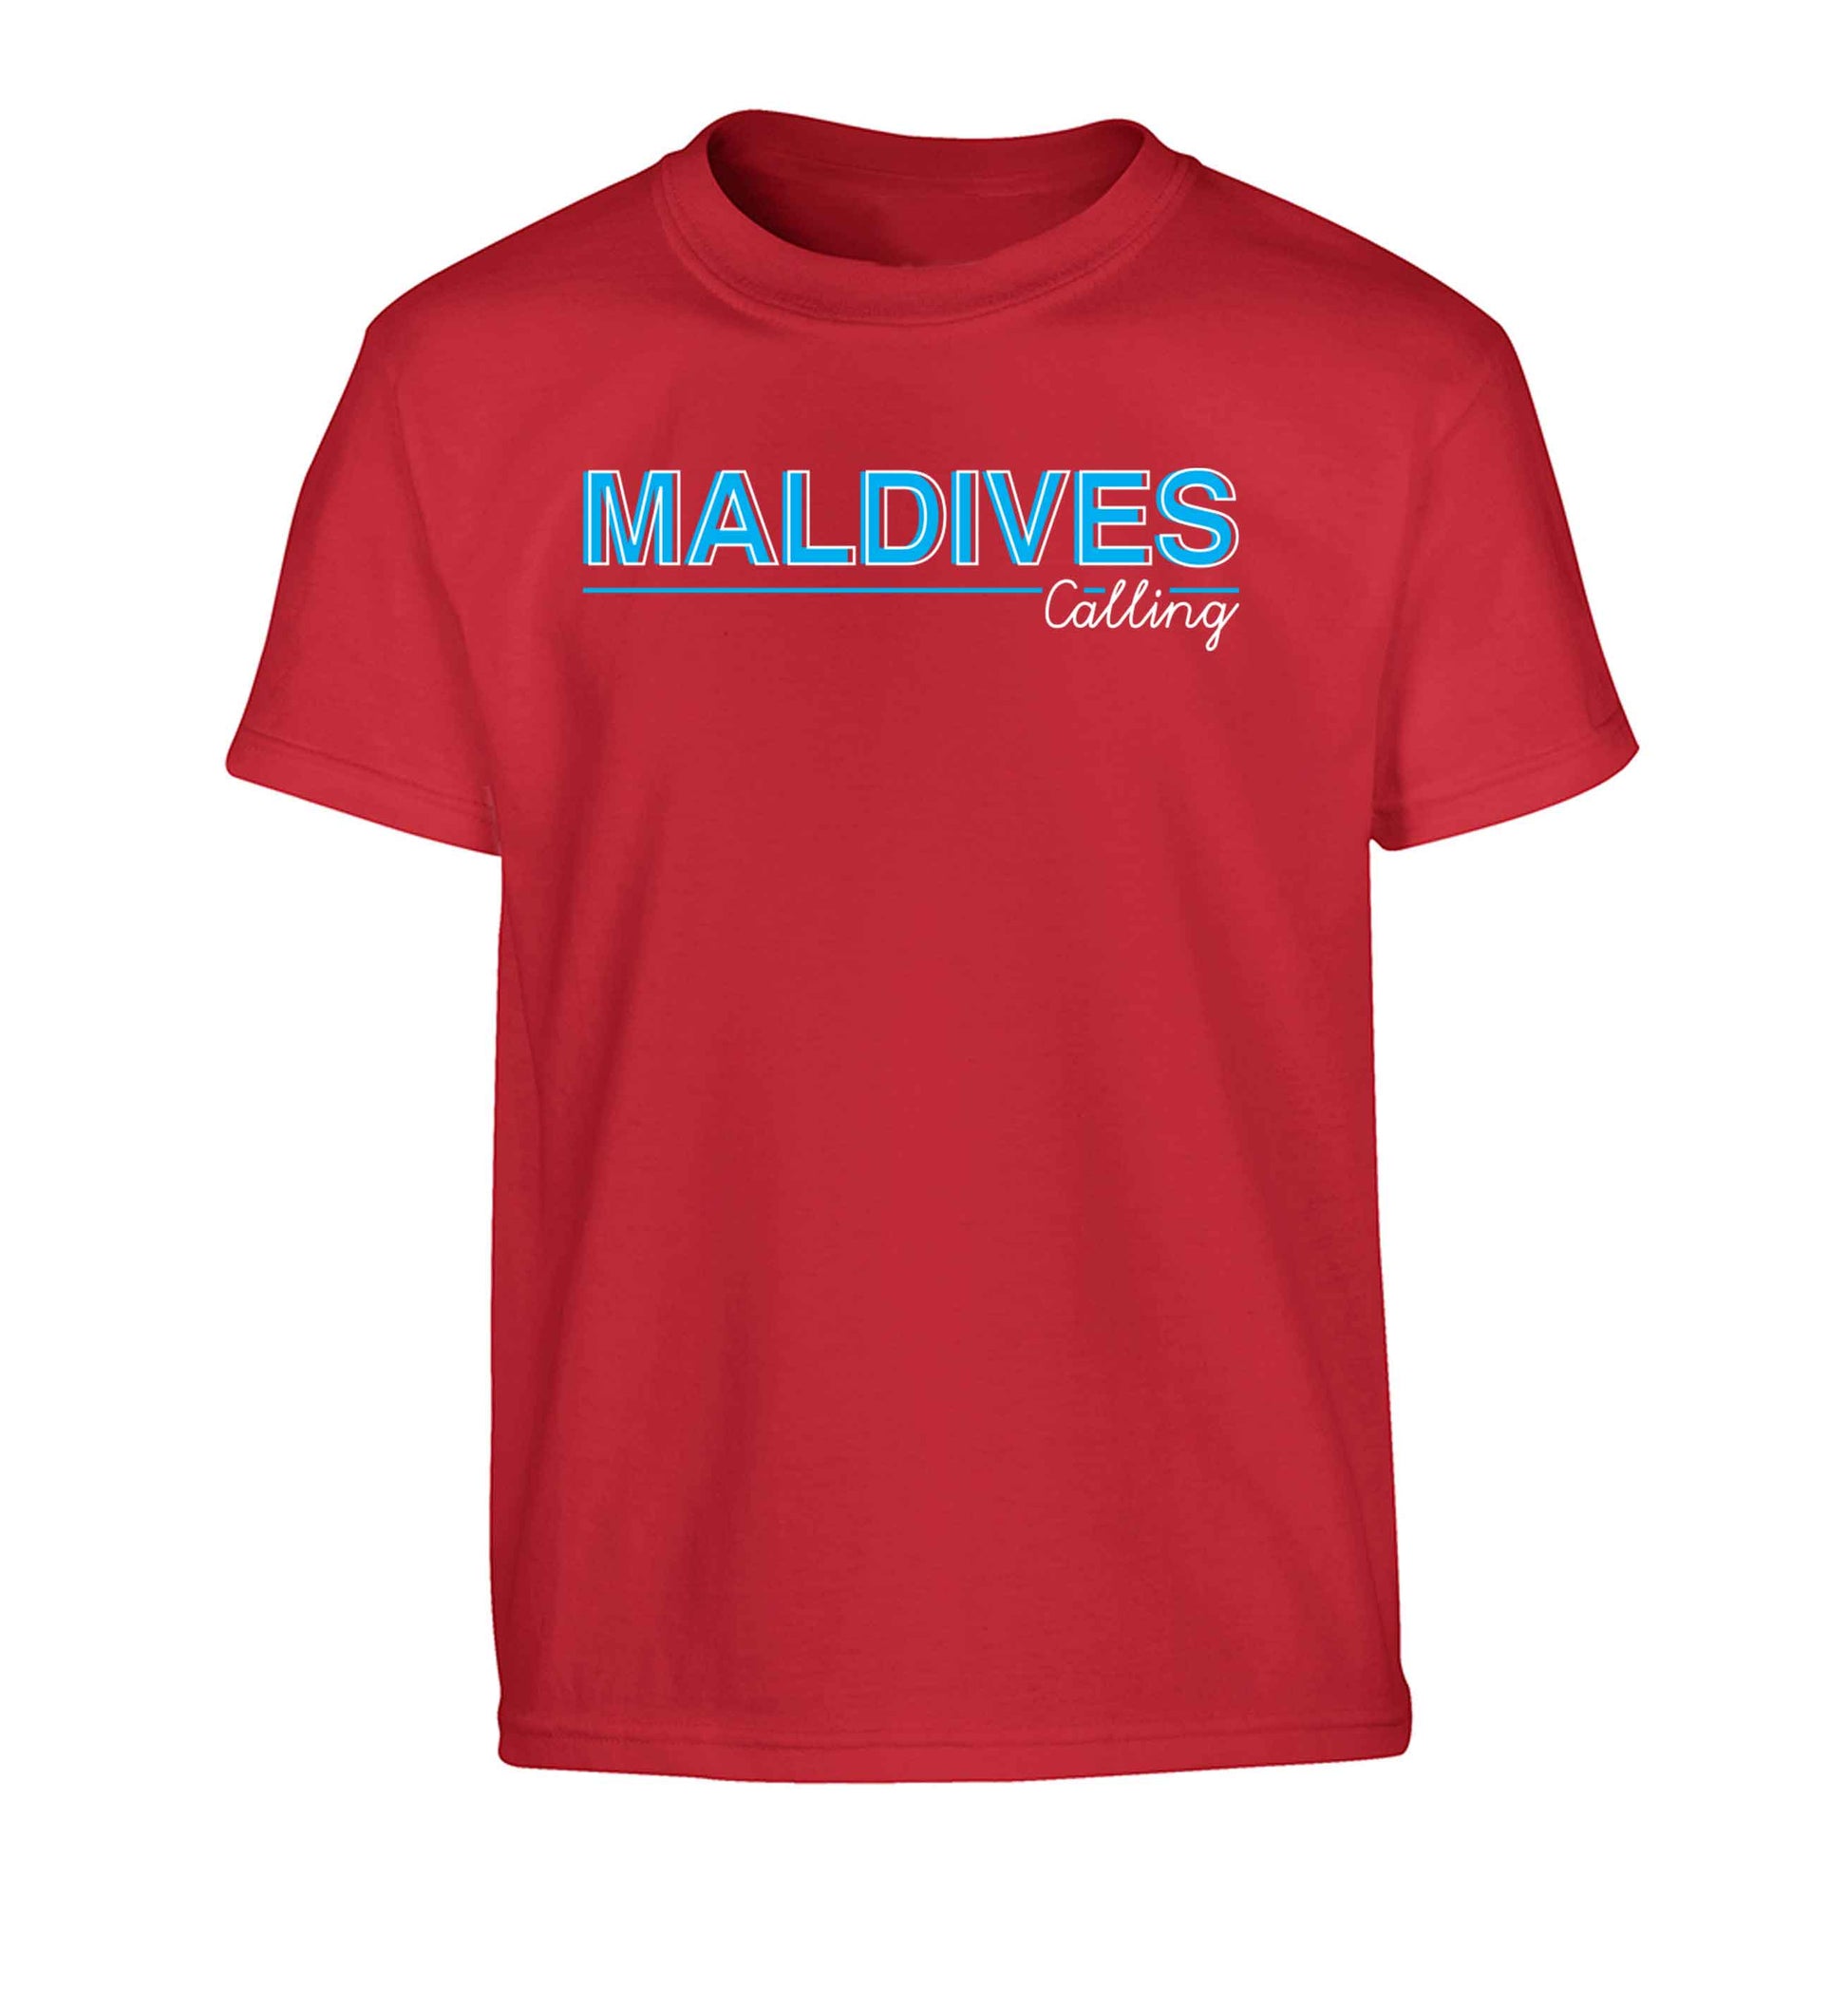 Maldives calling Children's red Tshirt 12-13 Years